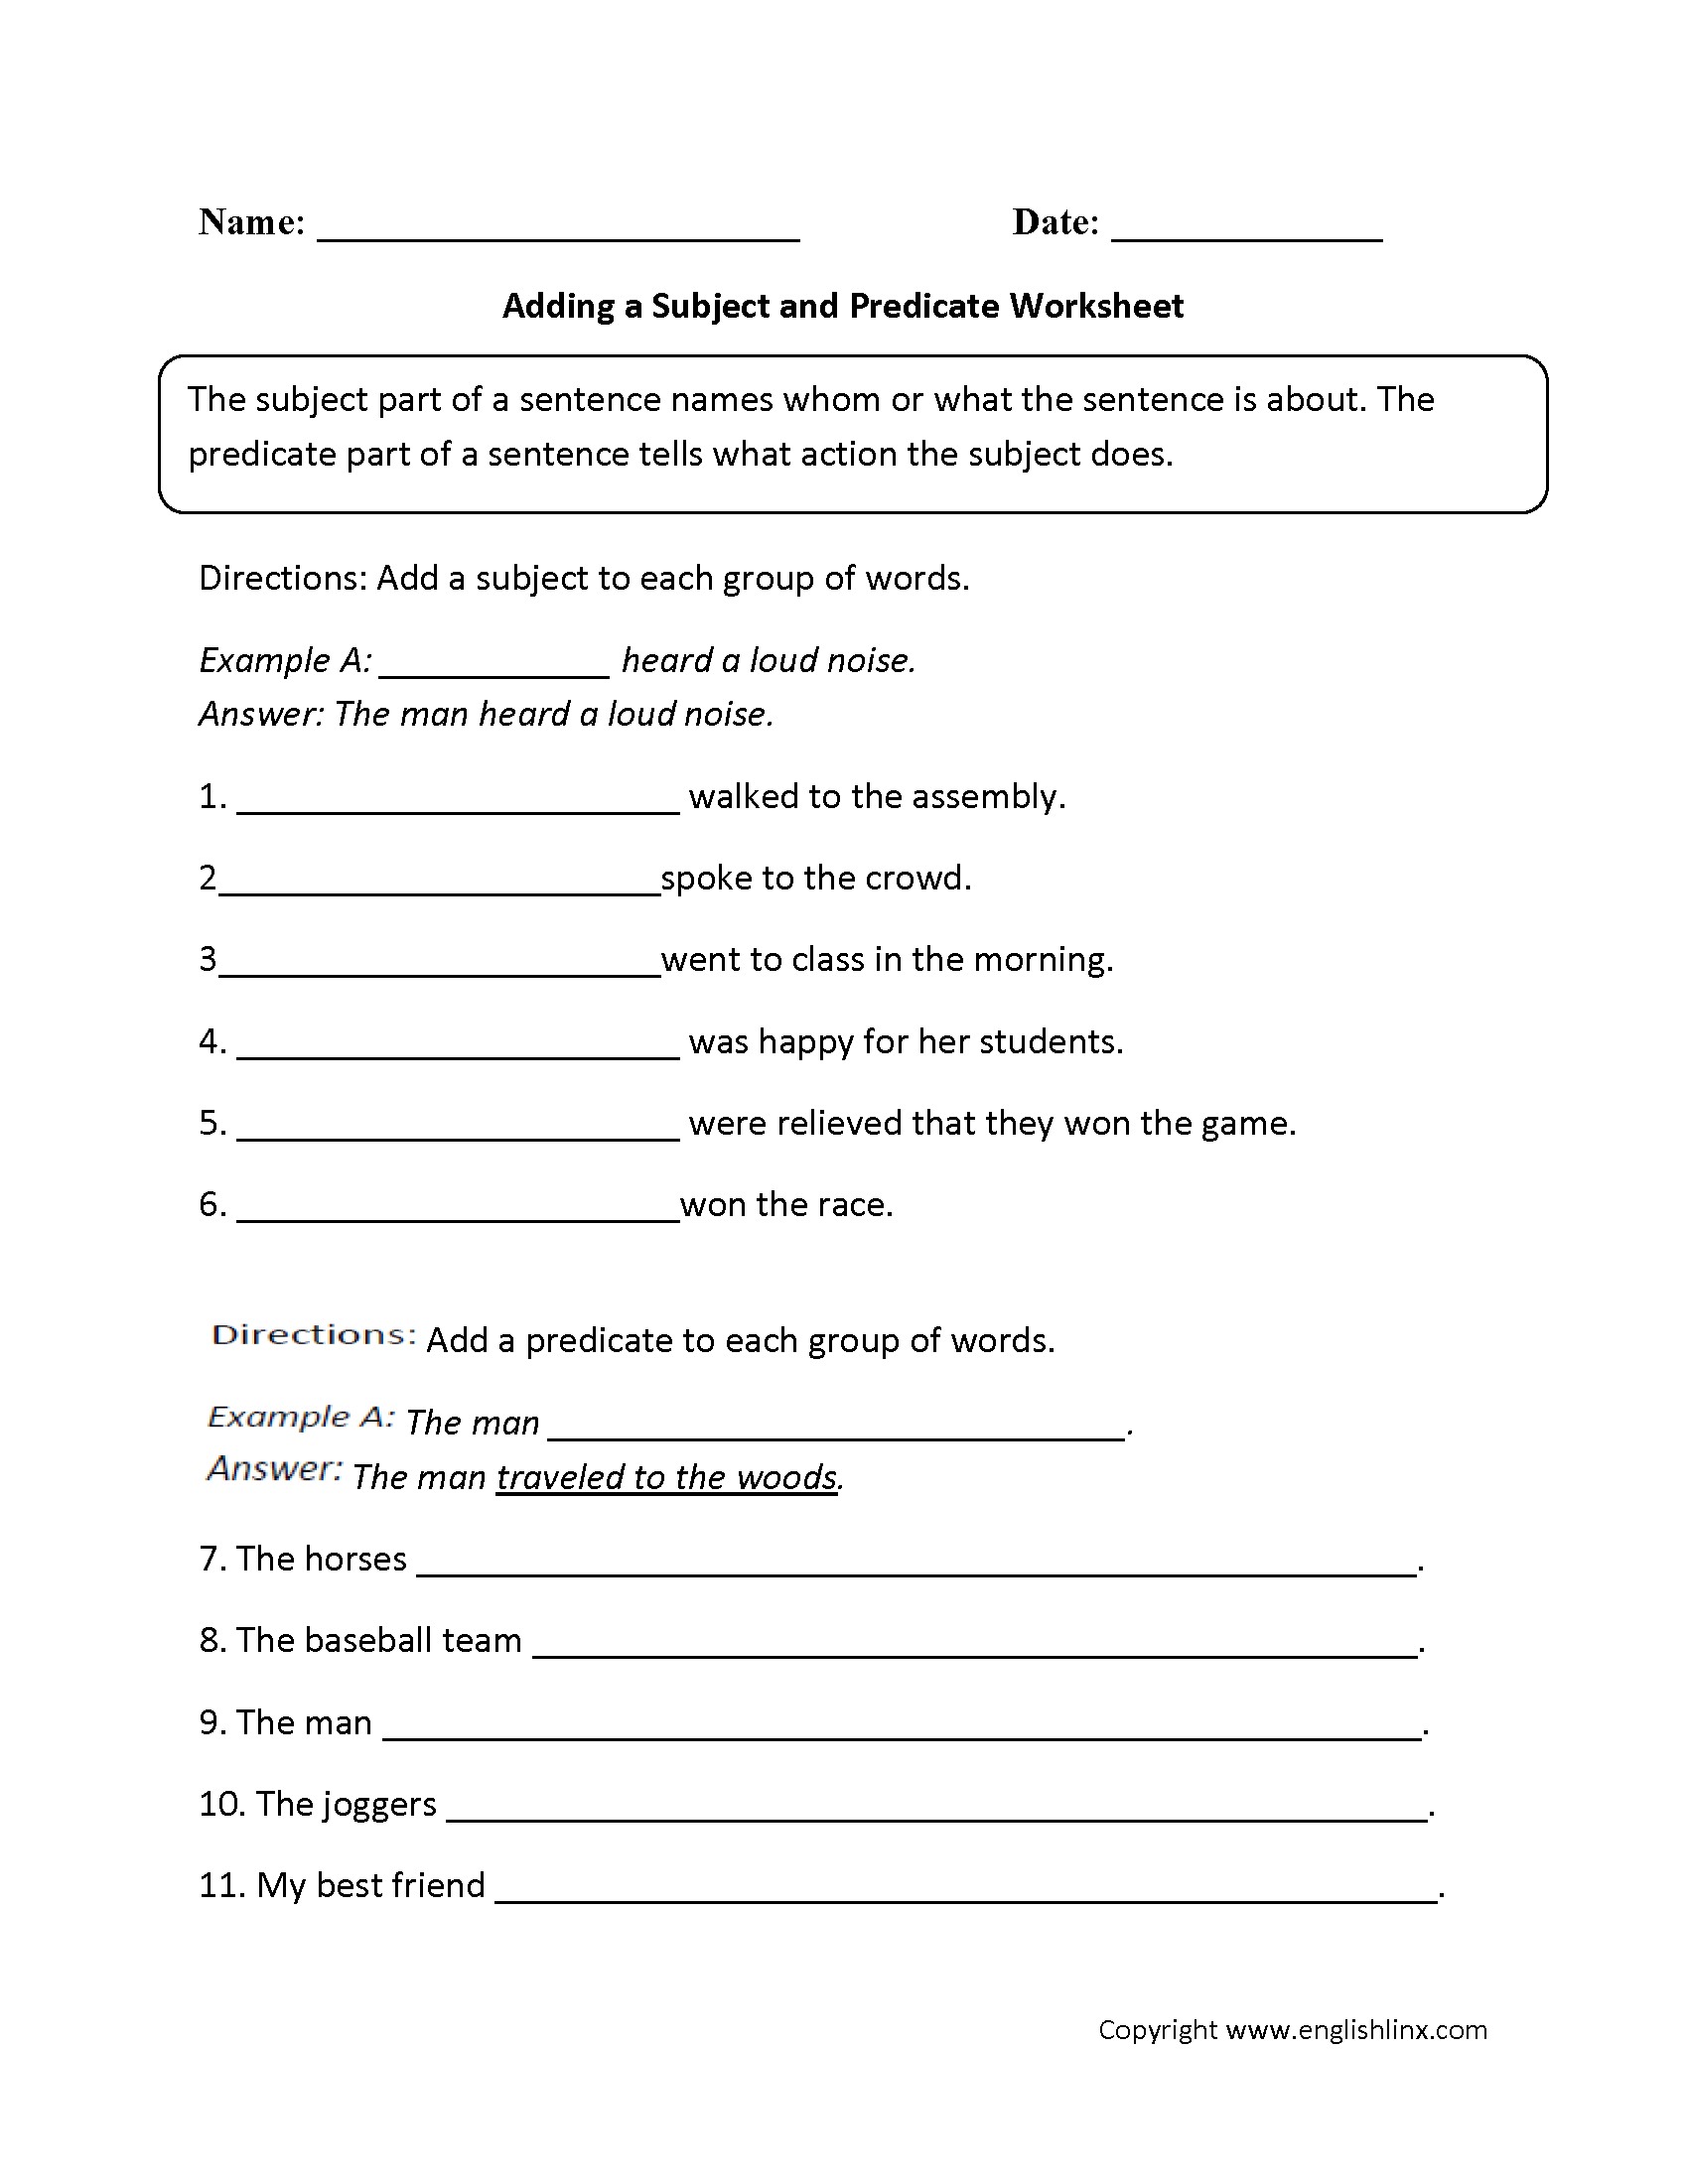 Adding A Subject And Predicate Worksheet | Englishlinx Board - Free Printable Subject Predicate Worksheets 2Nd Grade